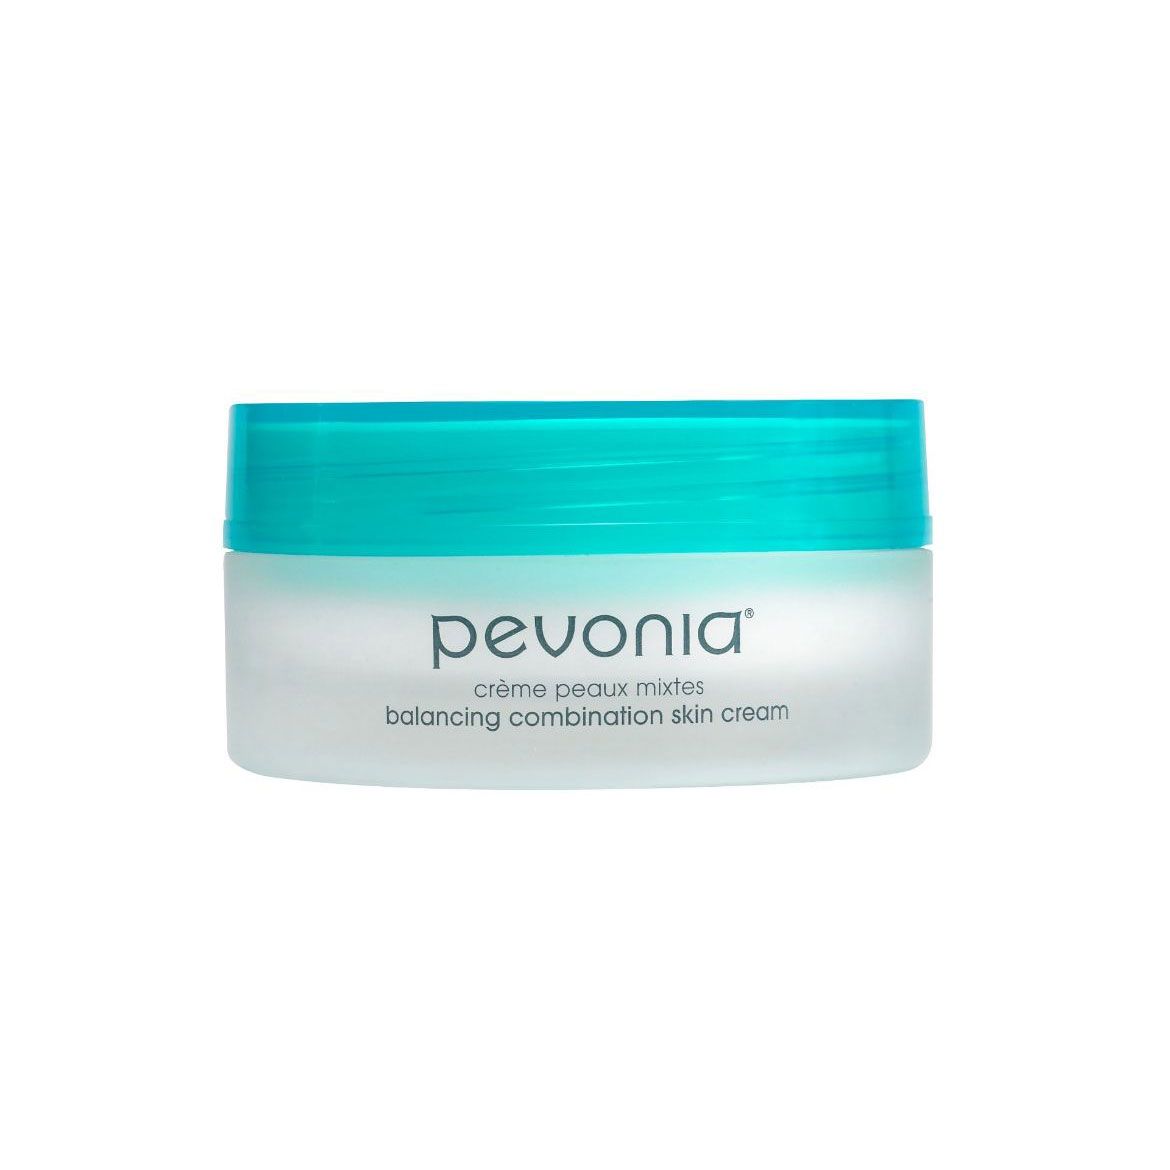 Image of Pevonia Balancing Combination Skin Cream (50ml)